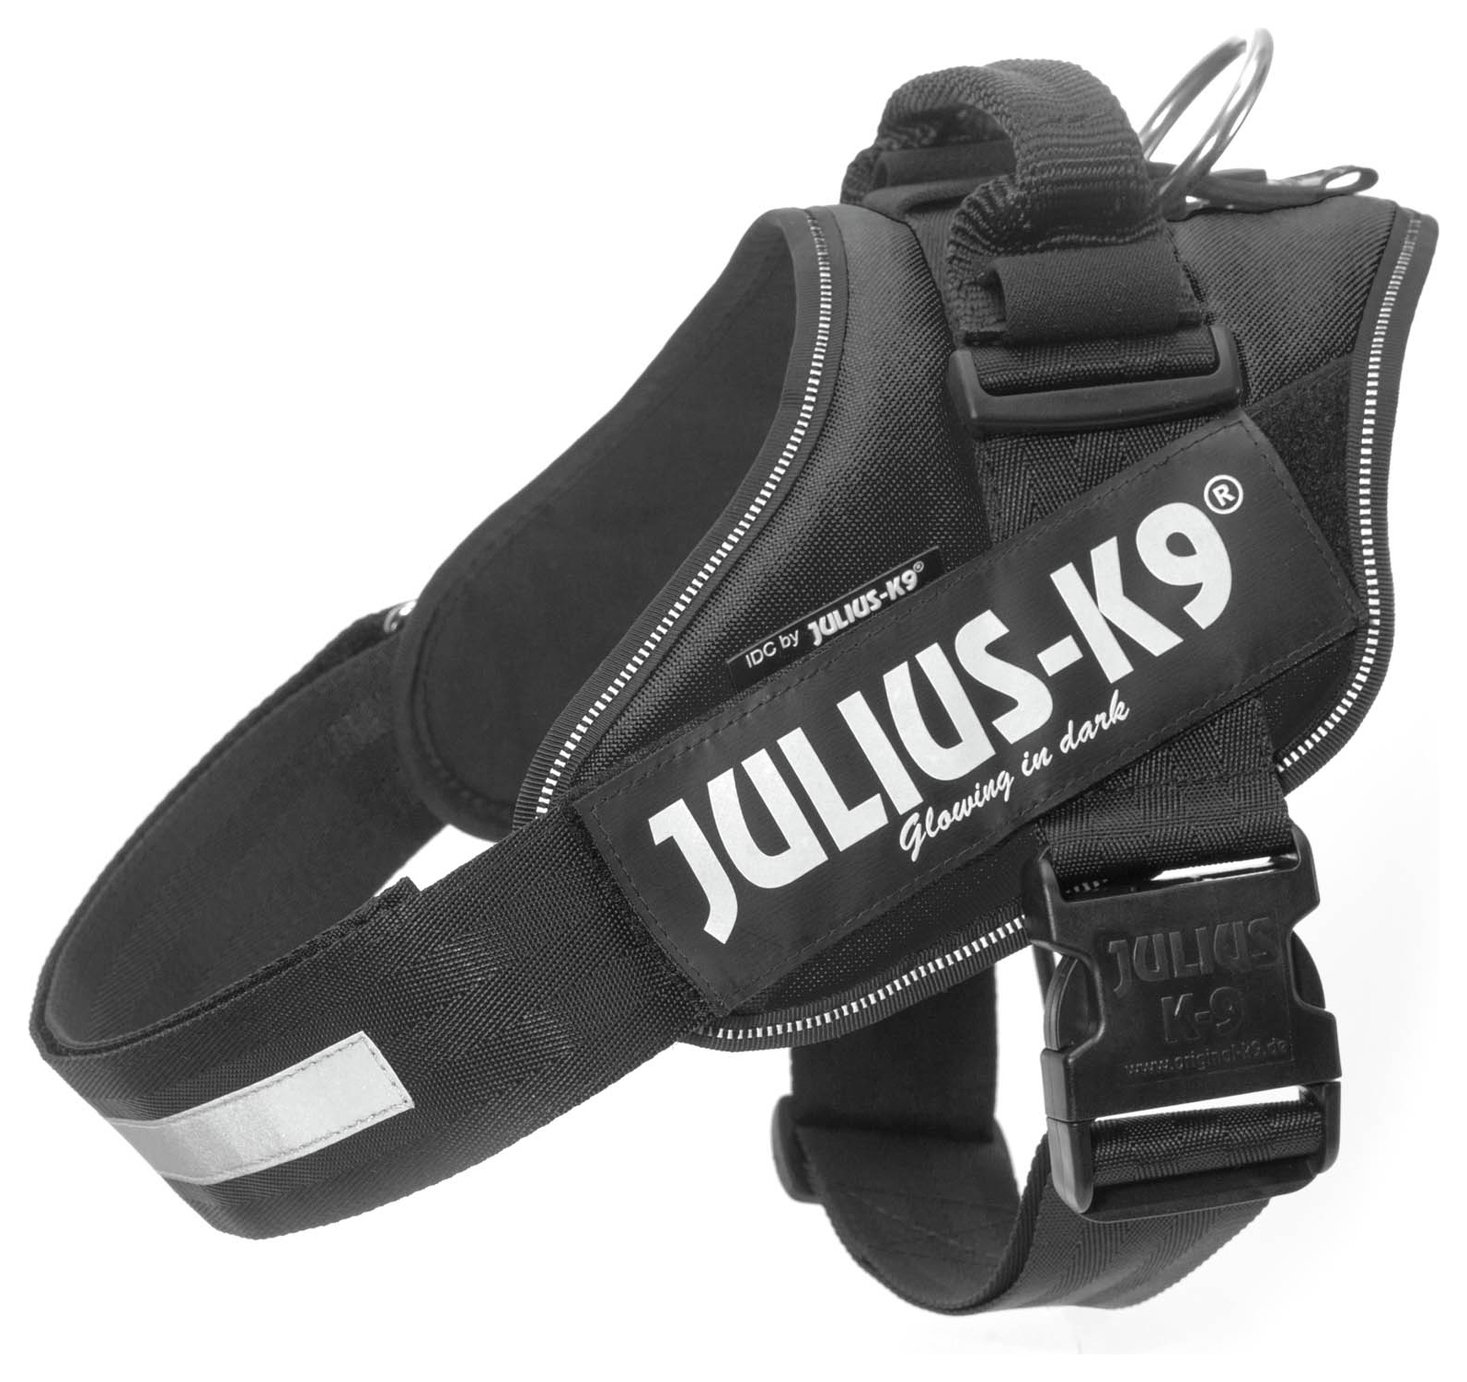 Julius-K9 IDC Power Harness - Black 2